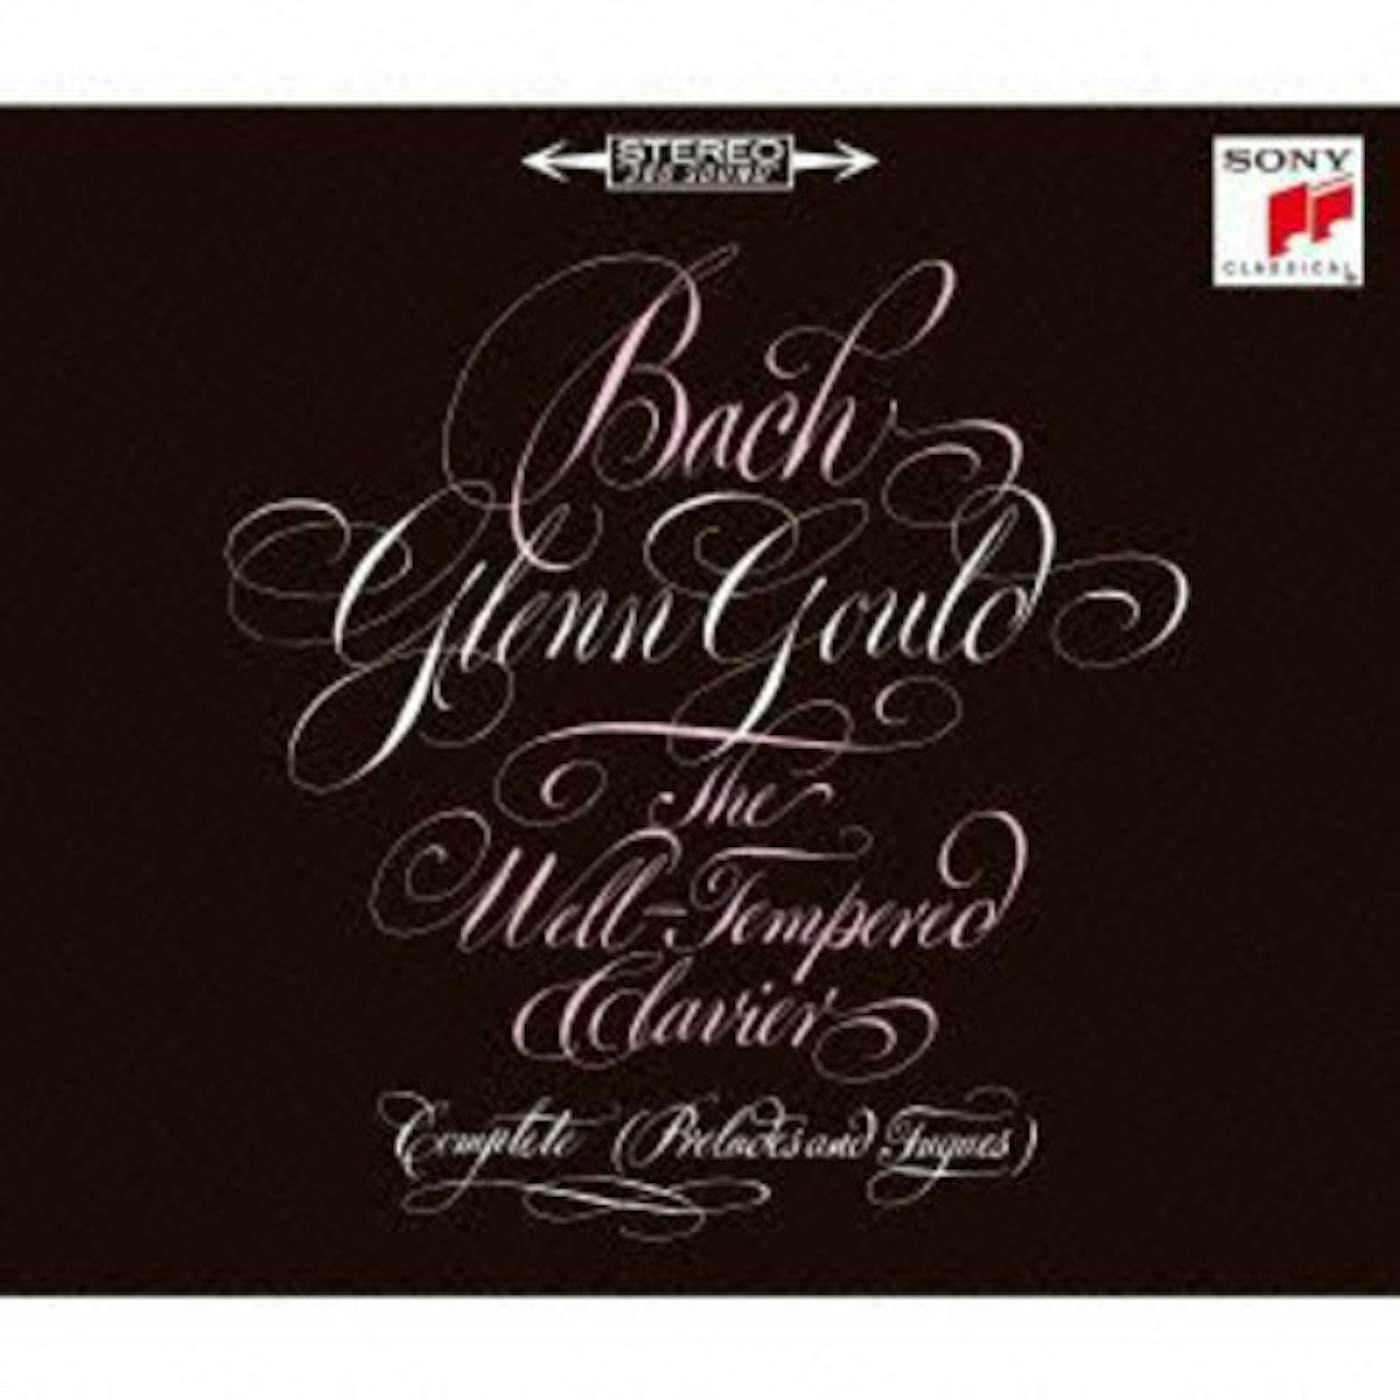 Glenn Gould BACH: WELL-TEMPERED CLAVIER (CE) CD